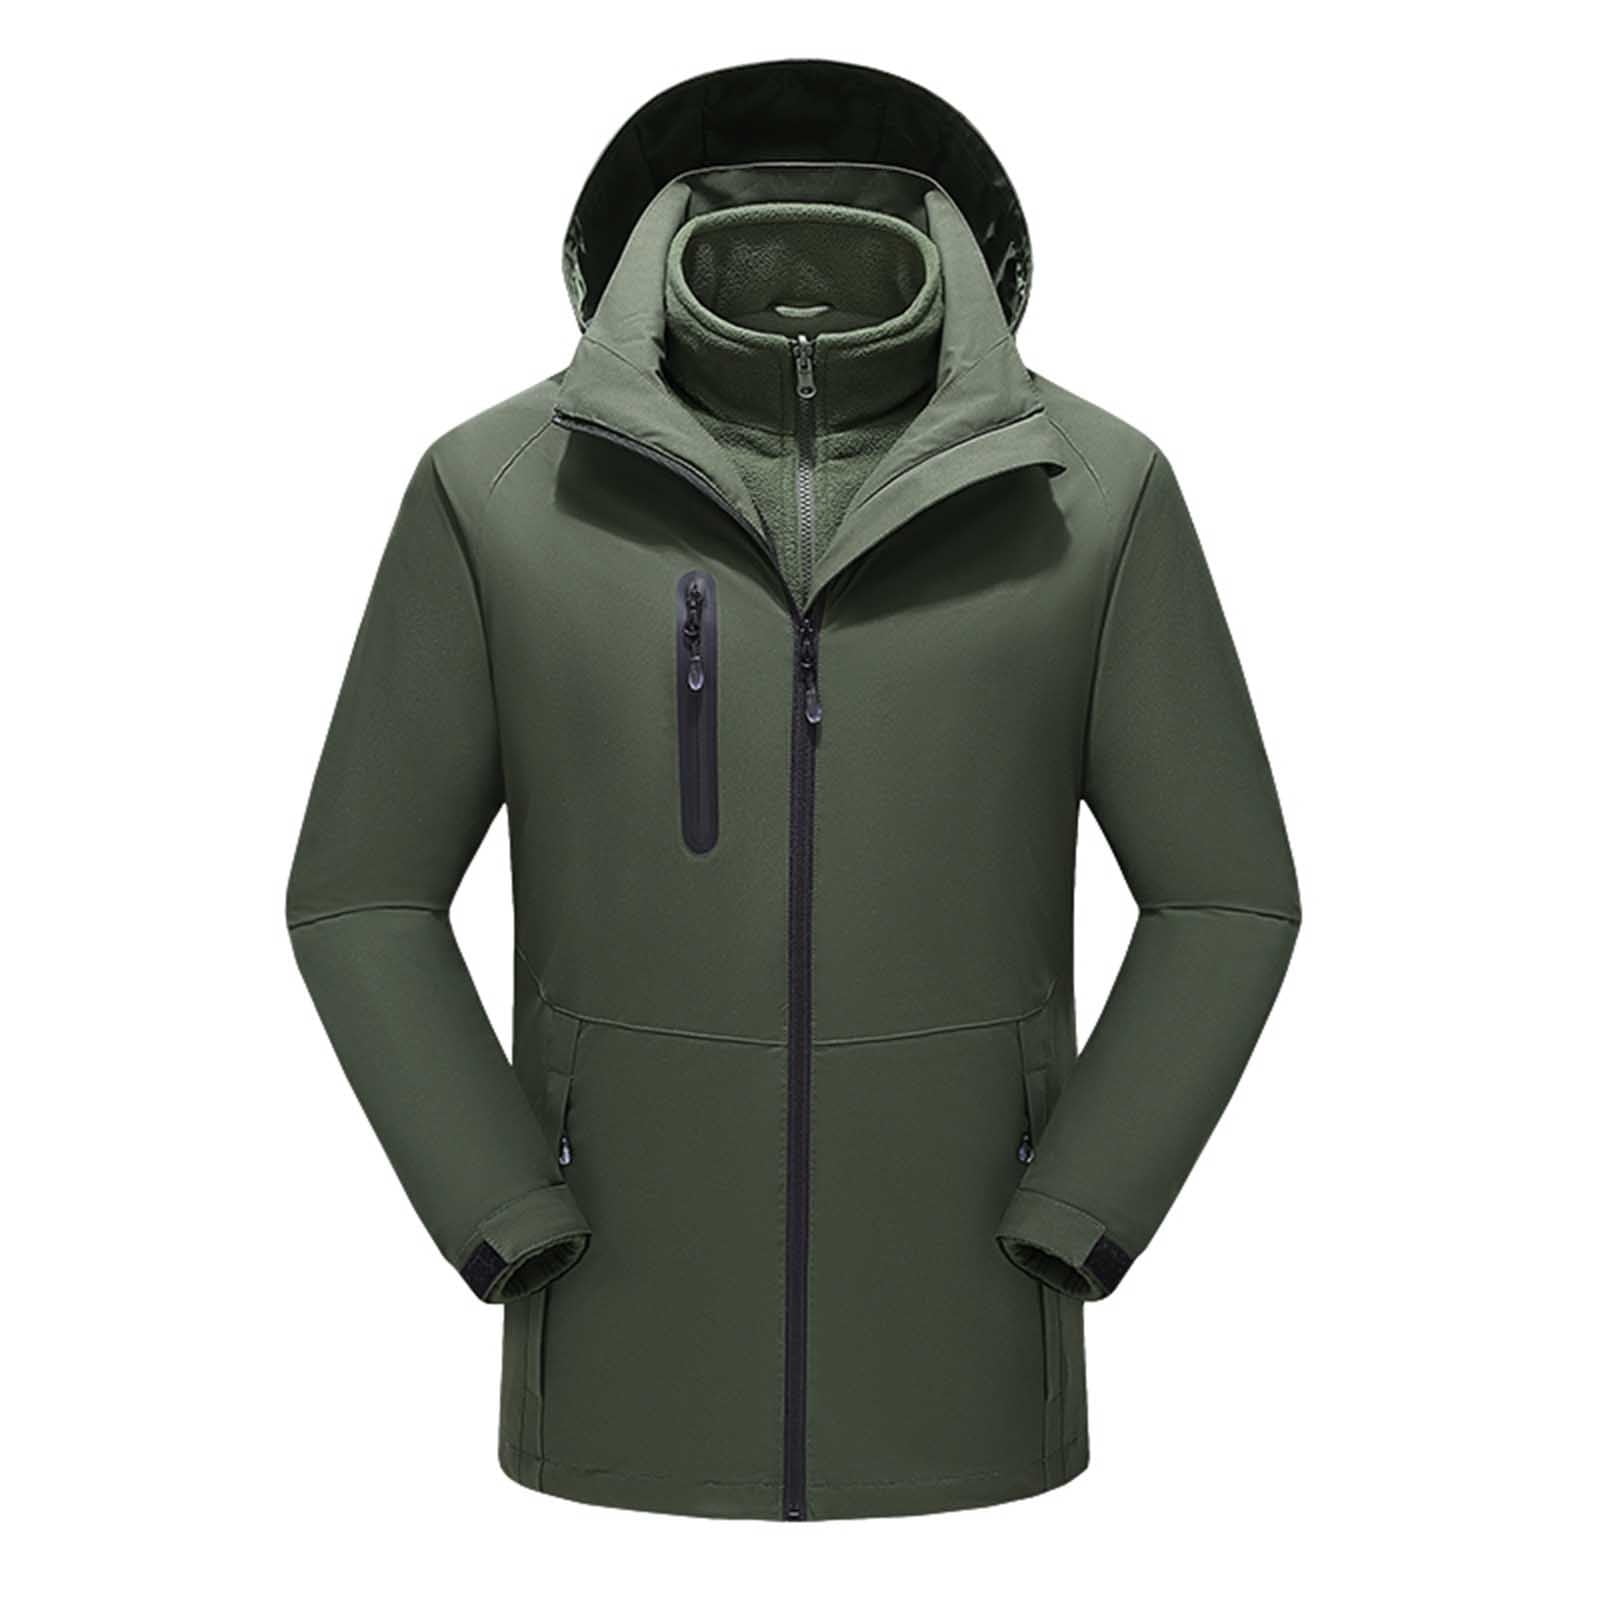 tklpehg Winter Coat Trendy Long Sleeve Jacket Outdoor Warm Clothing Heated  for Riding Skiing Fishing Charging Via Heated Coat Blue M 